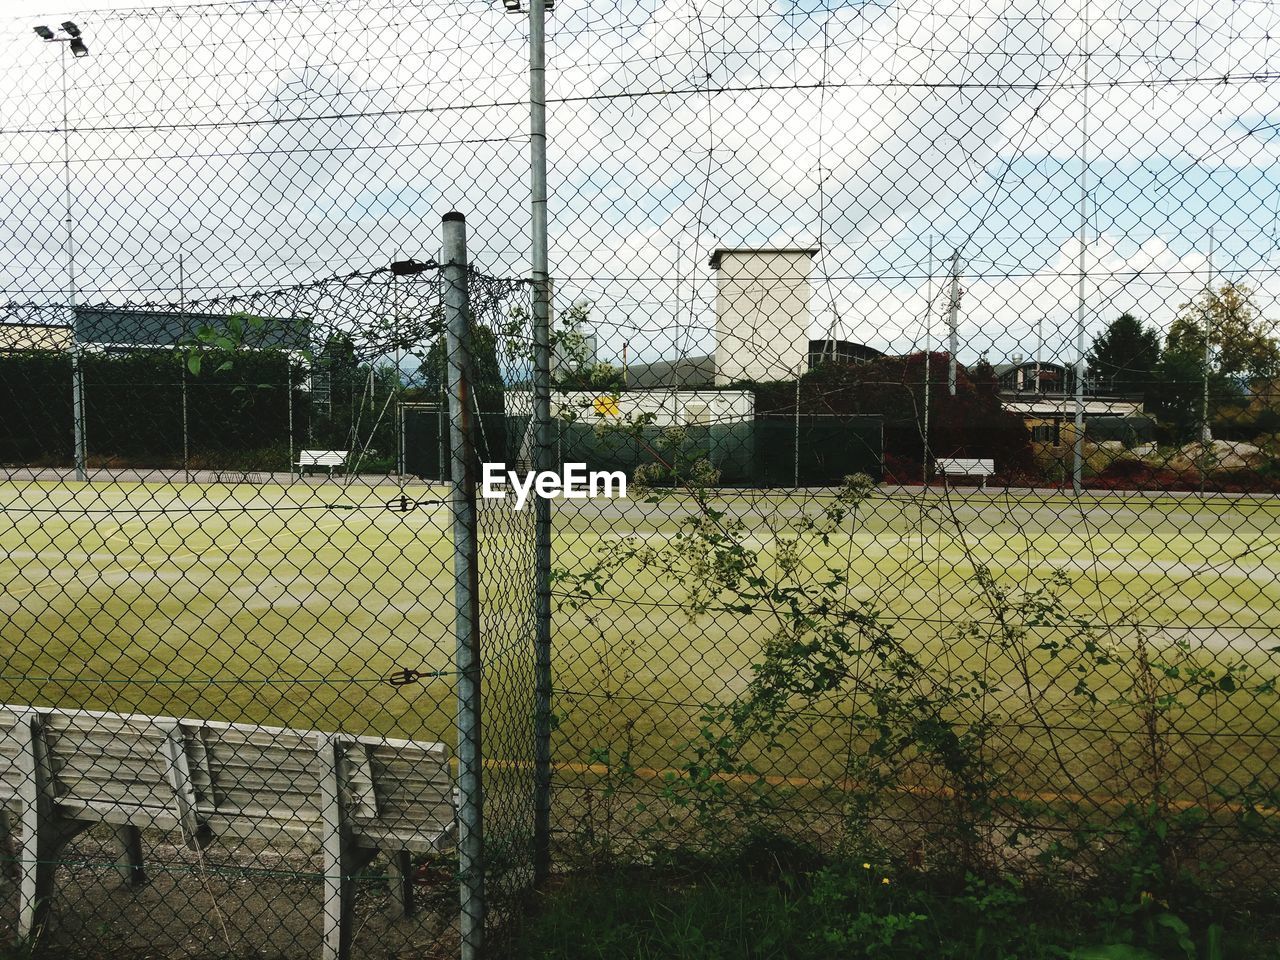 Soccer field seen through chainlink fence